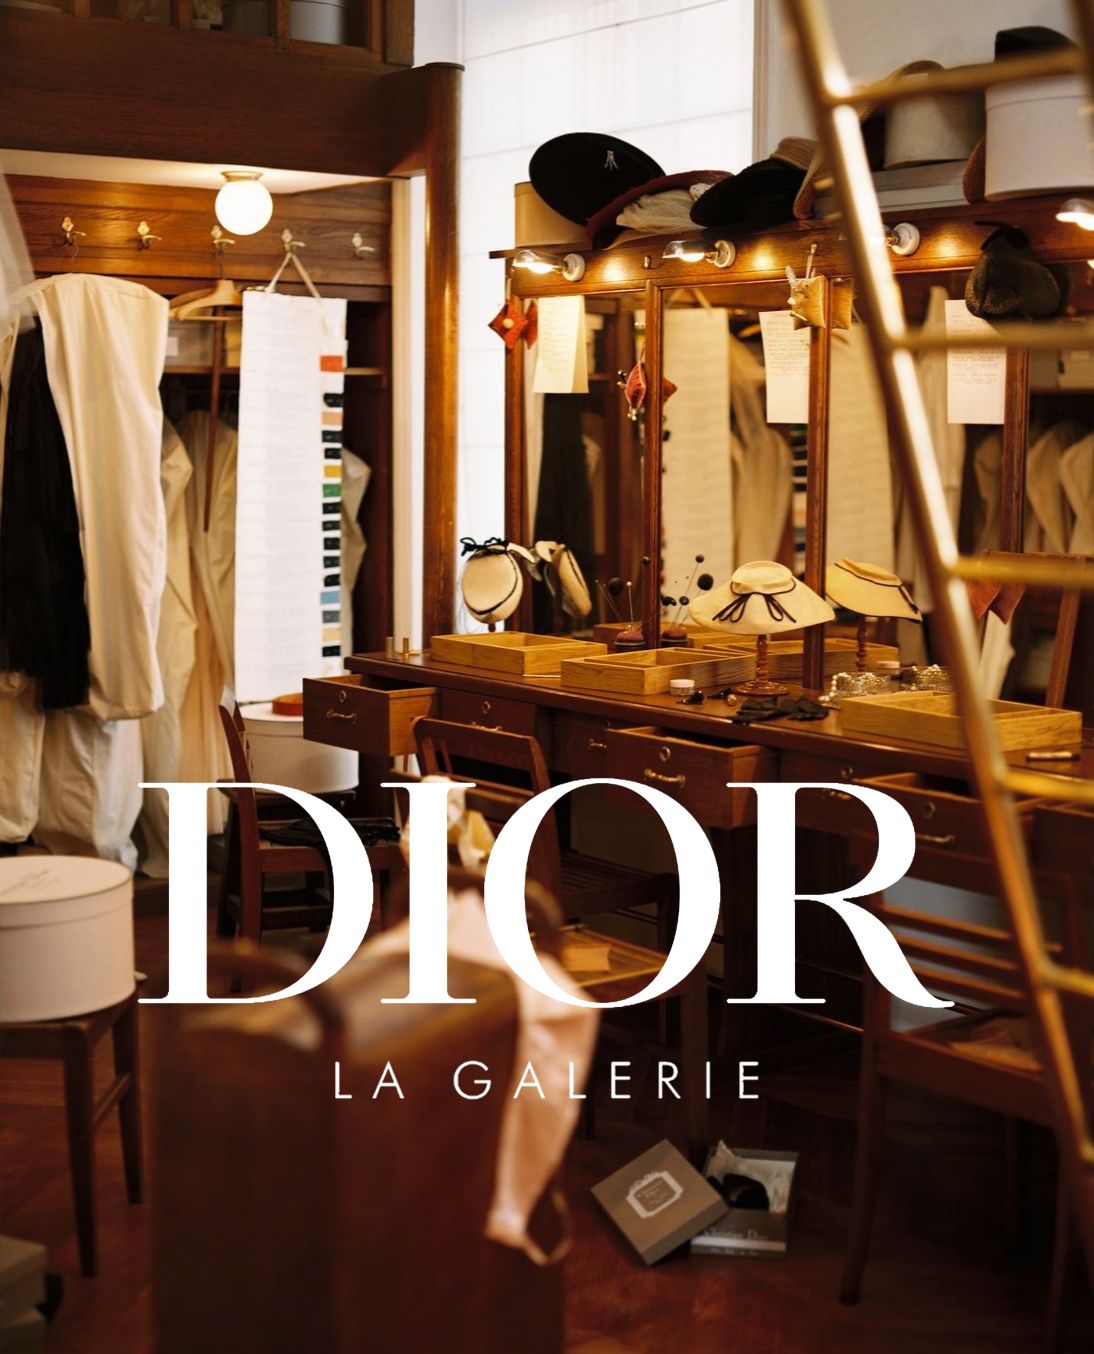 YOHANNES COUSY presents LA GALERIE for DIOR with ADRIEN POUJADE | TALENT MANAGEMENT - Set Design